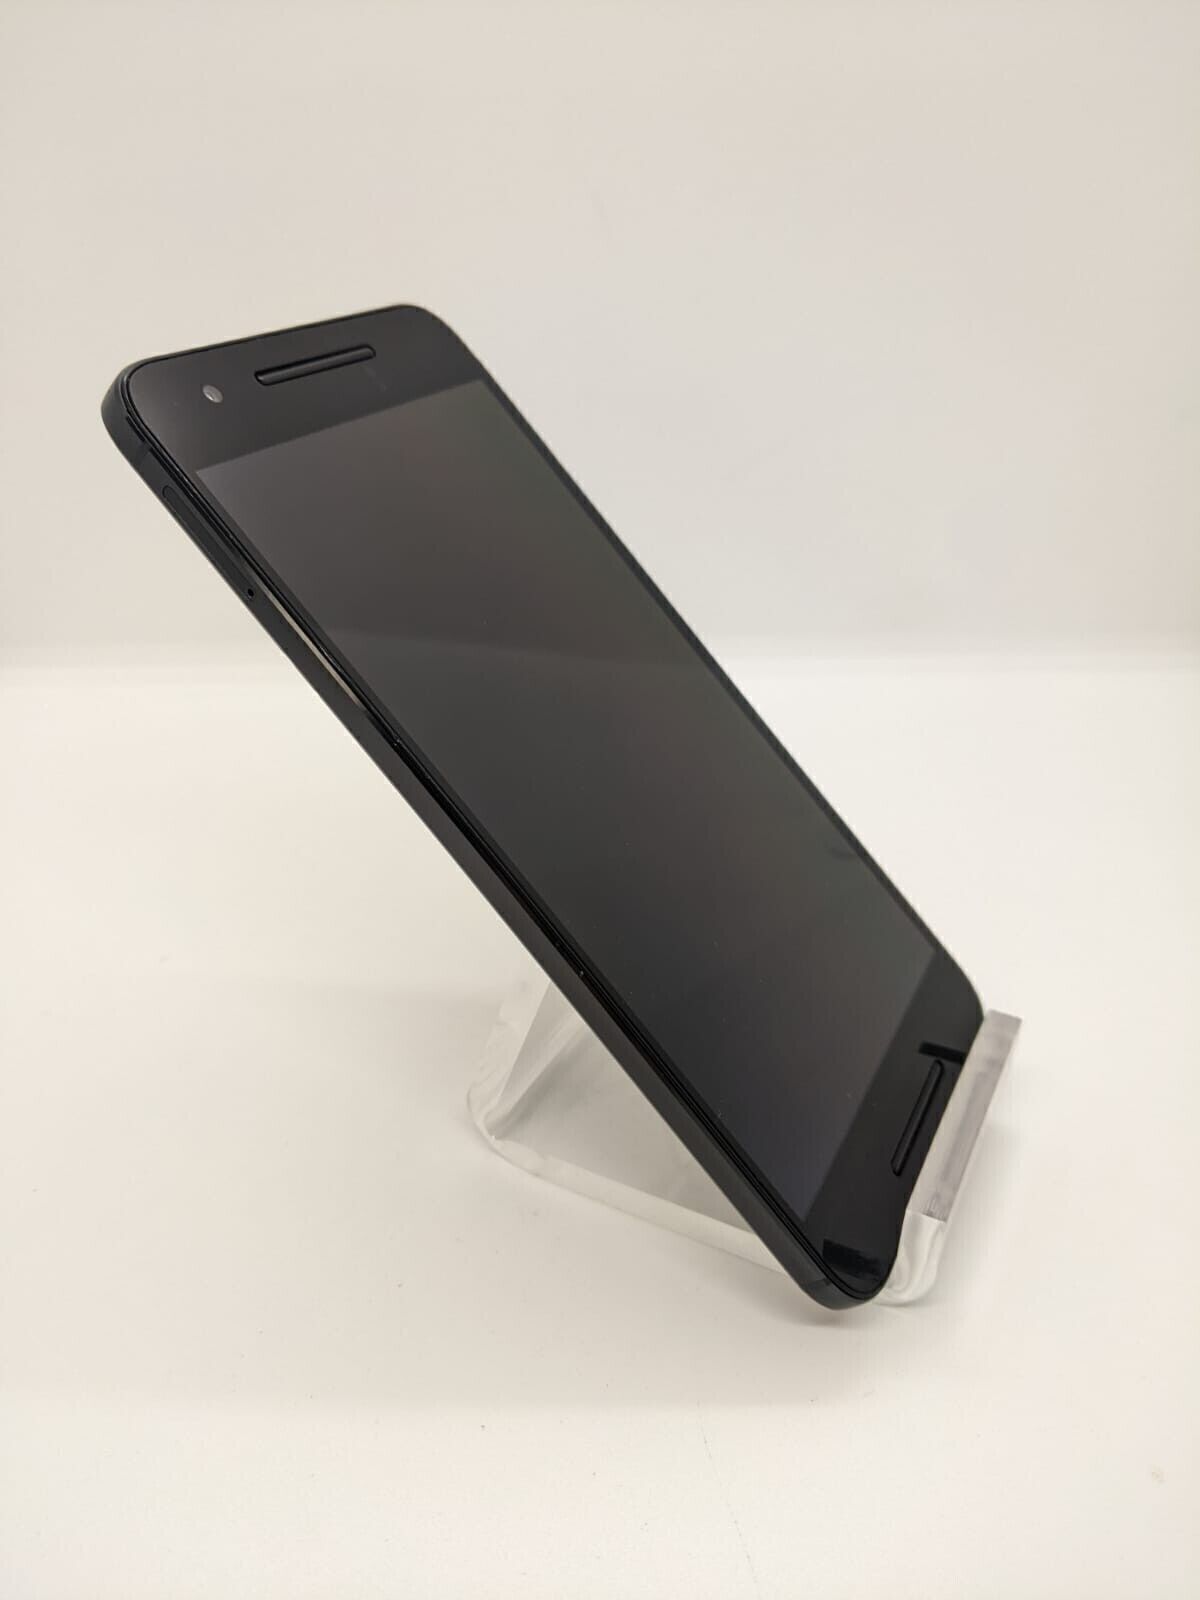 Huawei Nexus 6P 32GB Unlocked Rooted Kali Nethunter Smartphone H1511 Black